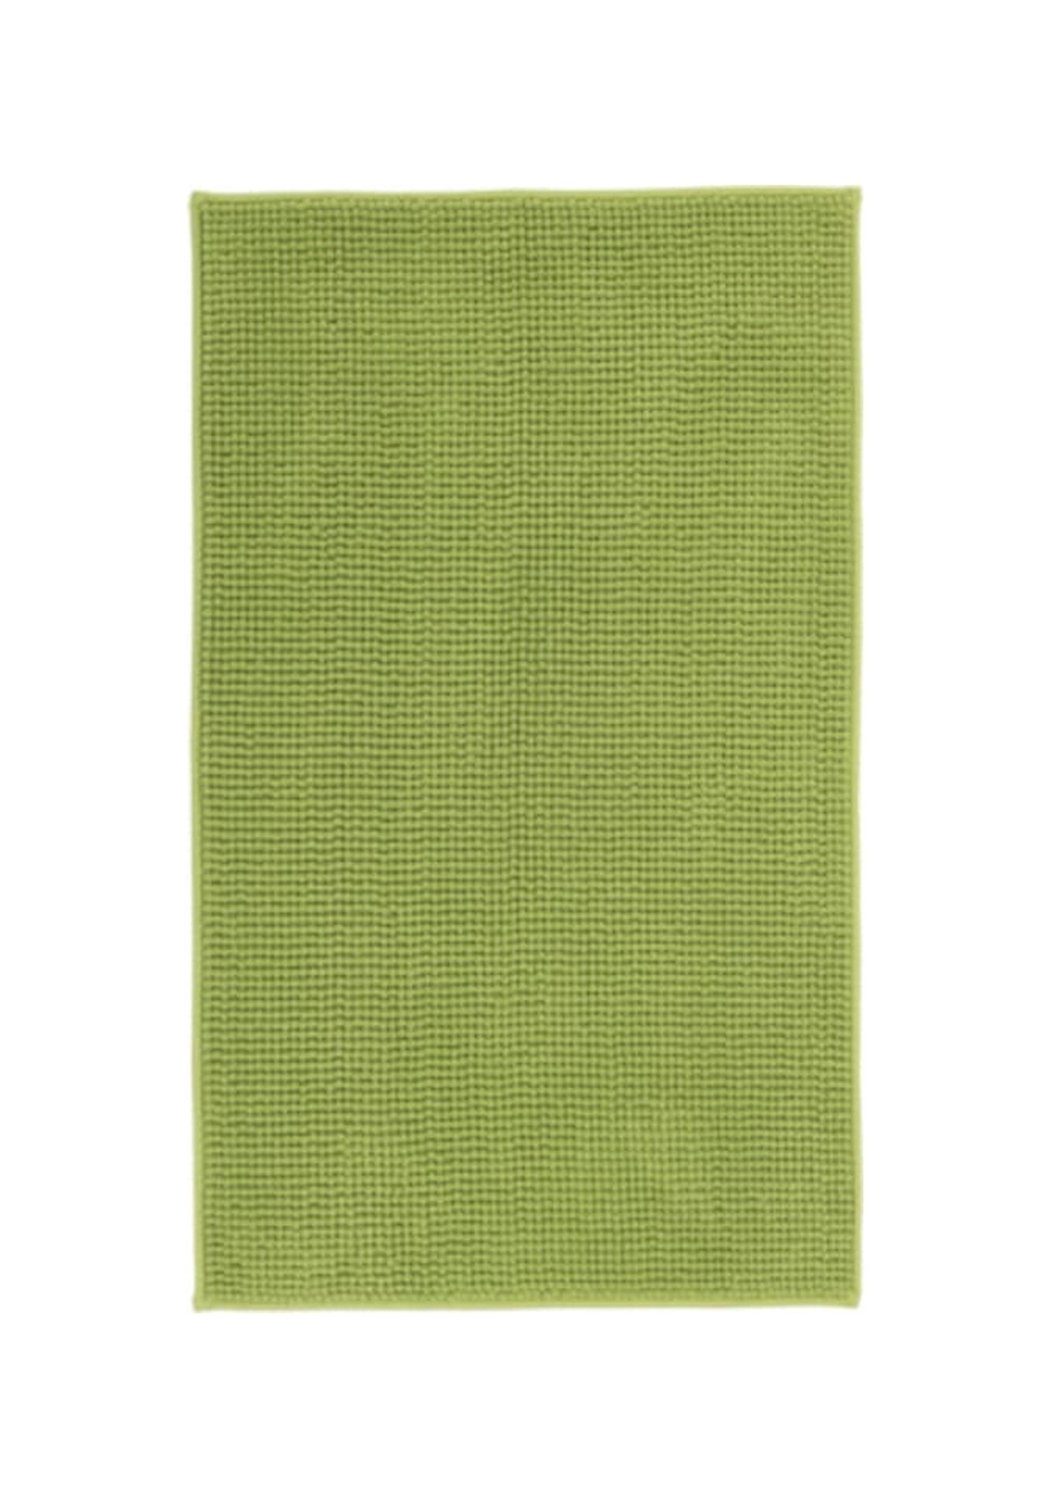 Gözze Badematte CHENILLE, Apfelgrün, 70 x 50 cm, Uni, Höhe 15.0 mm, rutschhemmend beschichtet, fußbodenheizungsgeeignet, Polyester, rechteckig